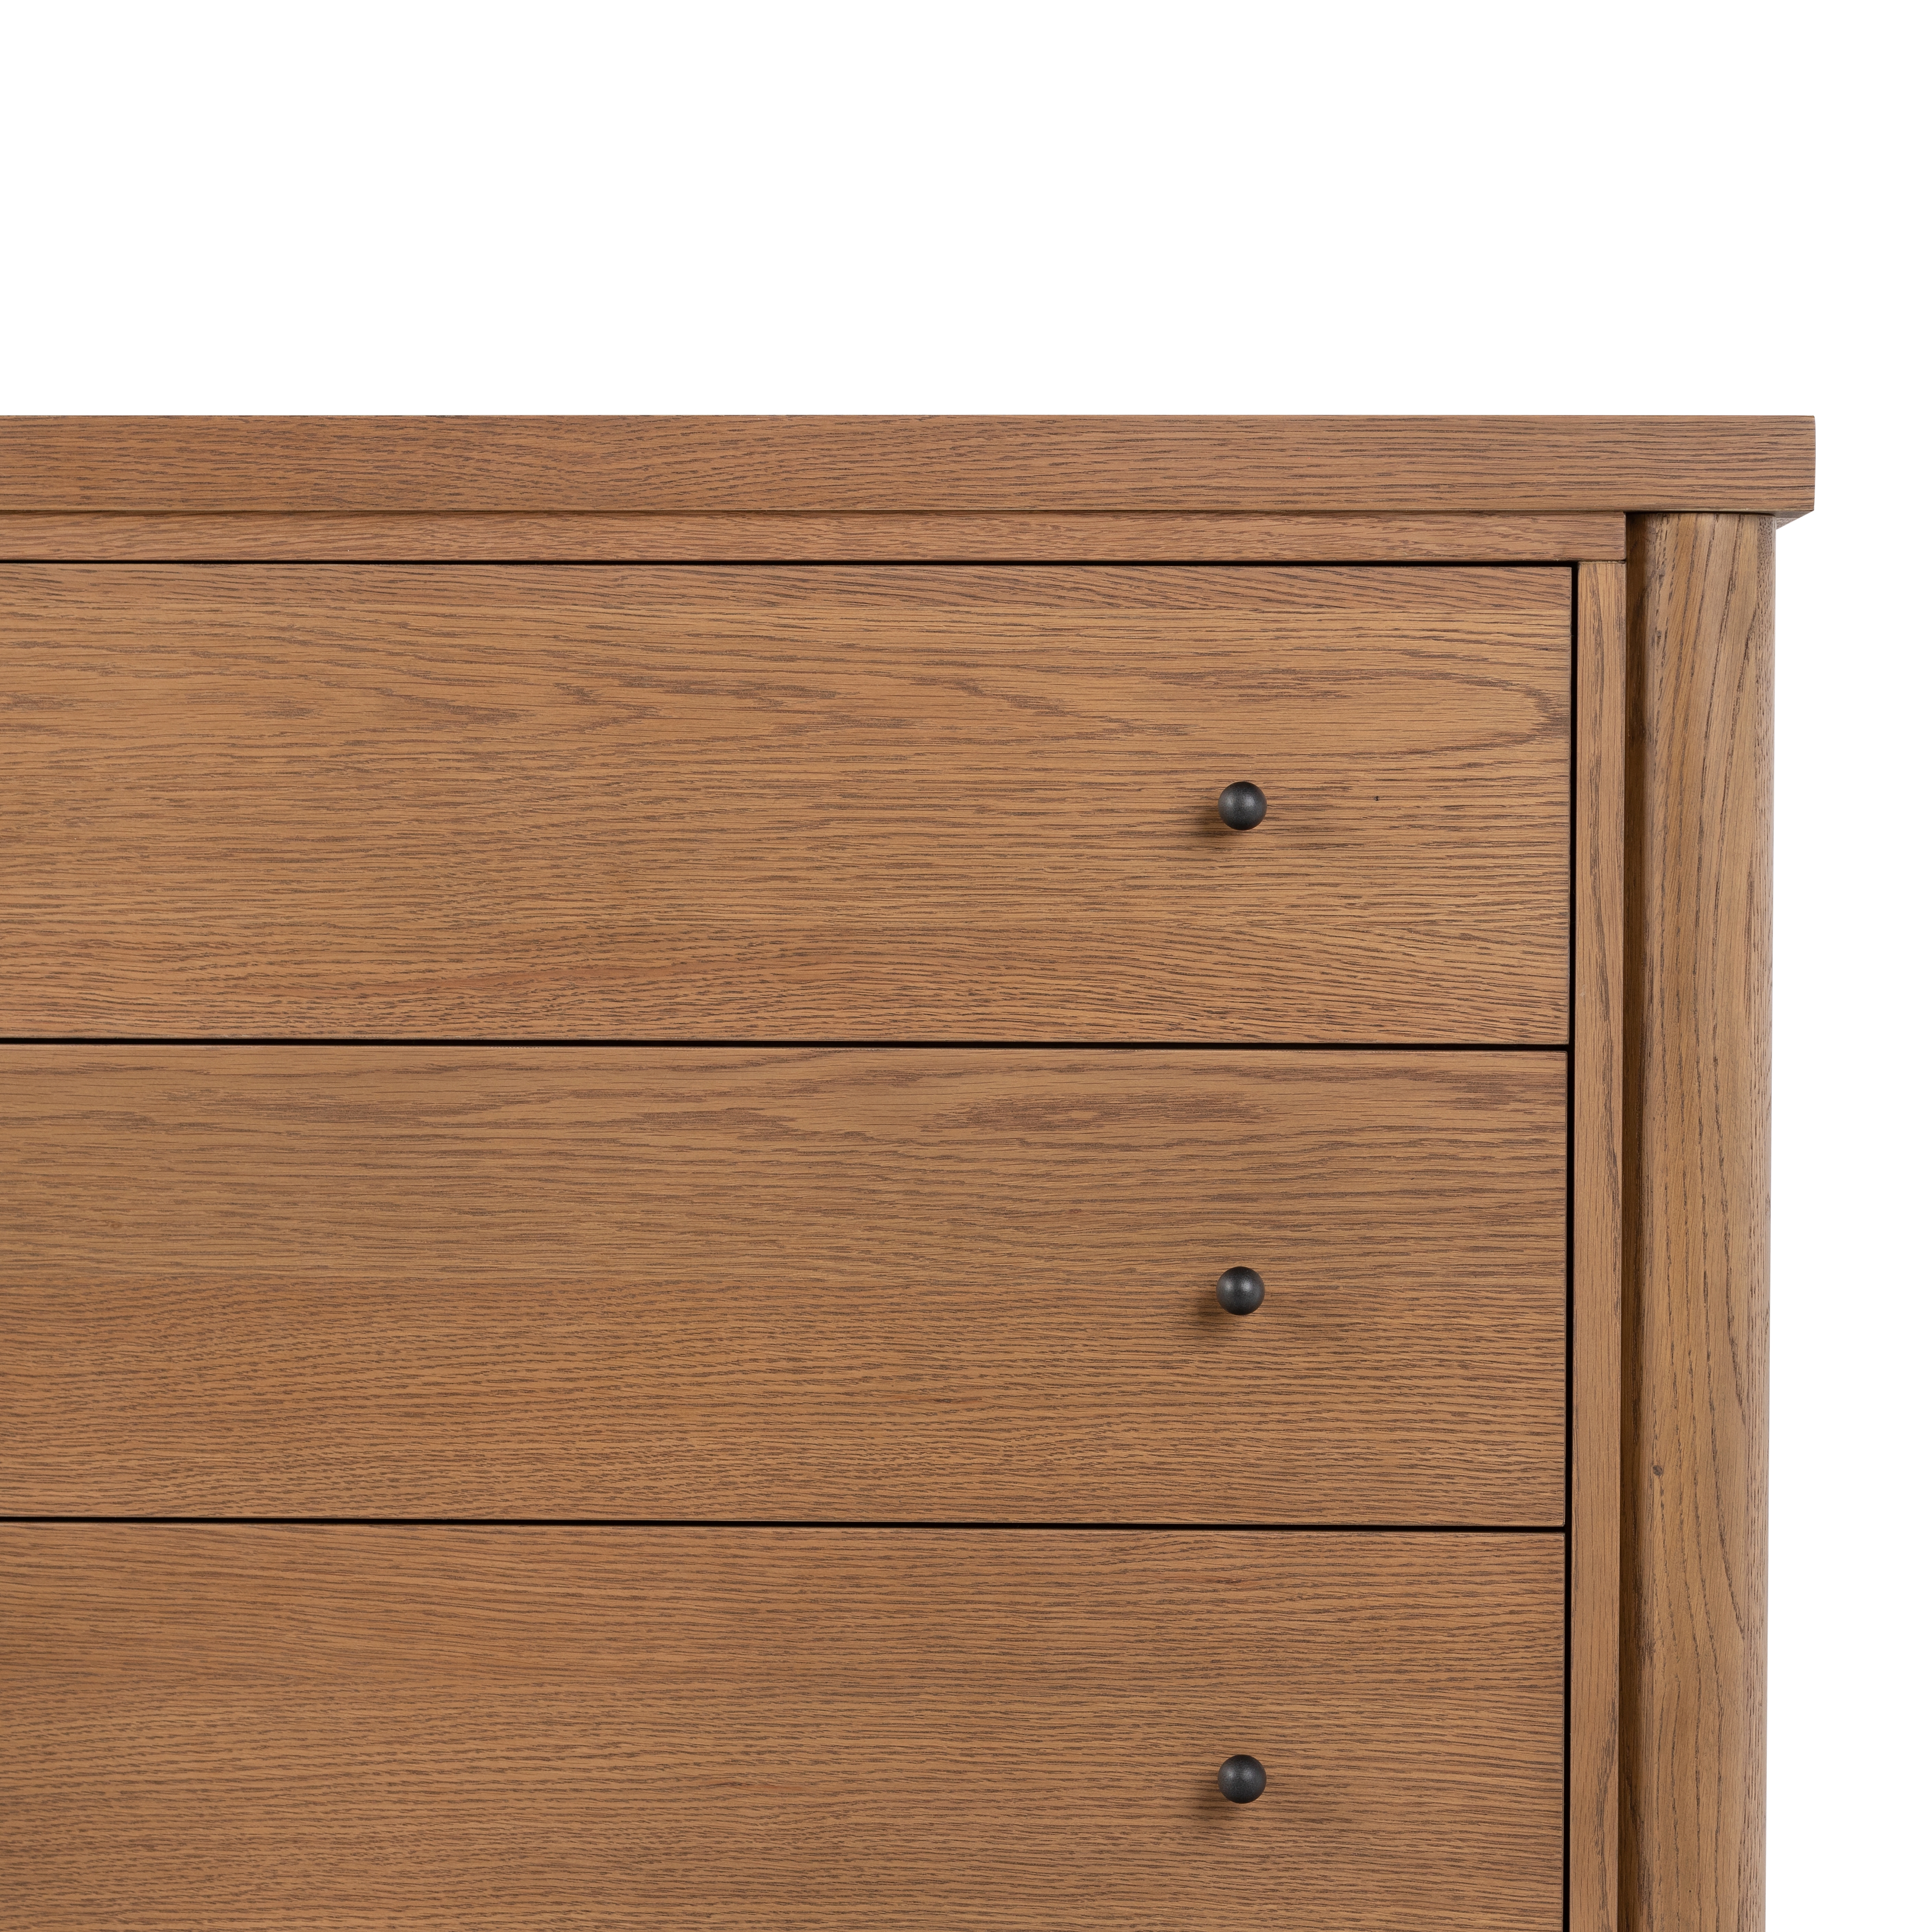 Roark 6 Drawer Dresser-Amber Oak Veneer - Image 2